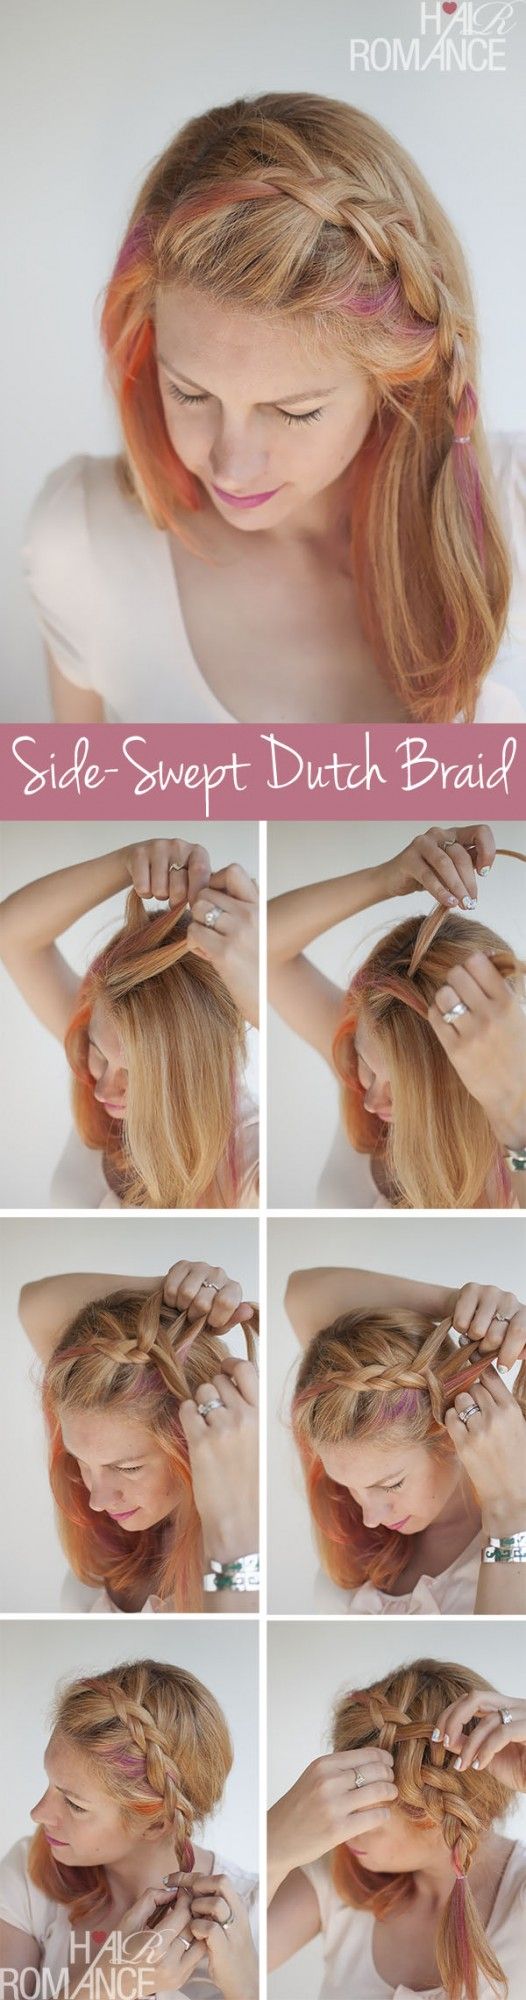 Dutch braid swept to the side